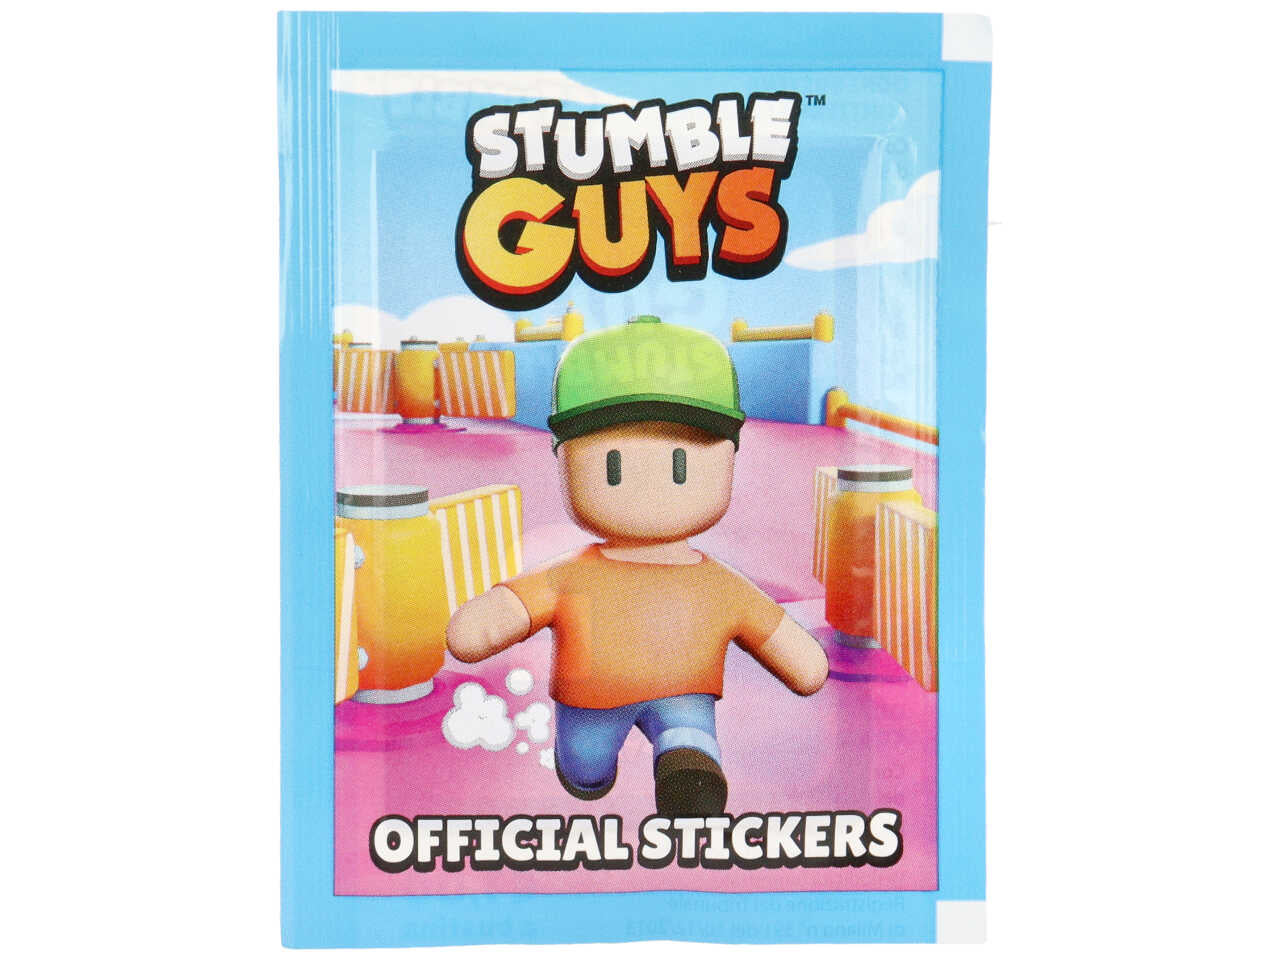 Stumble guys card figurine